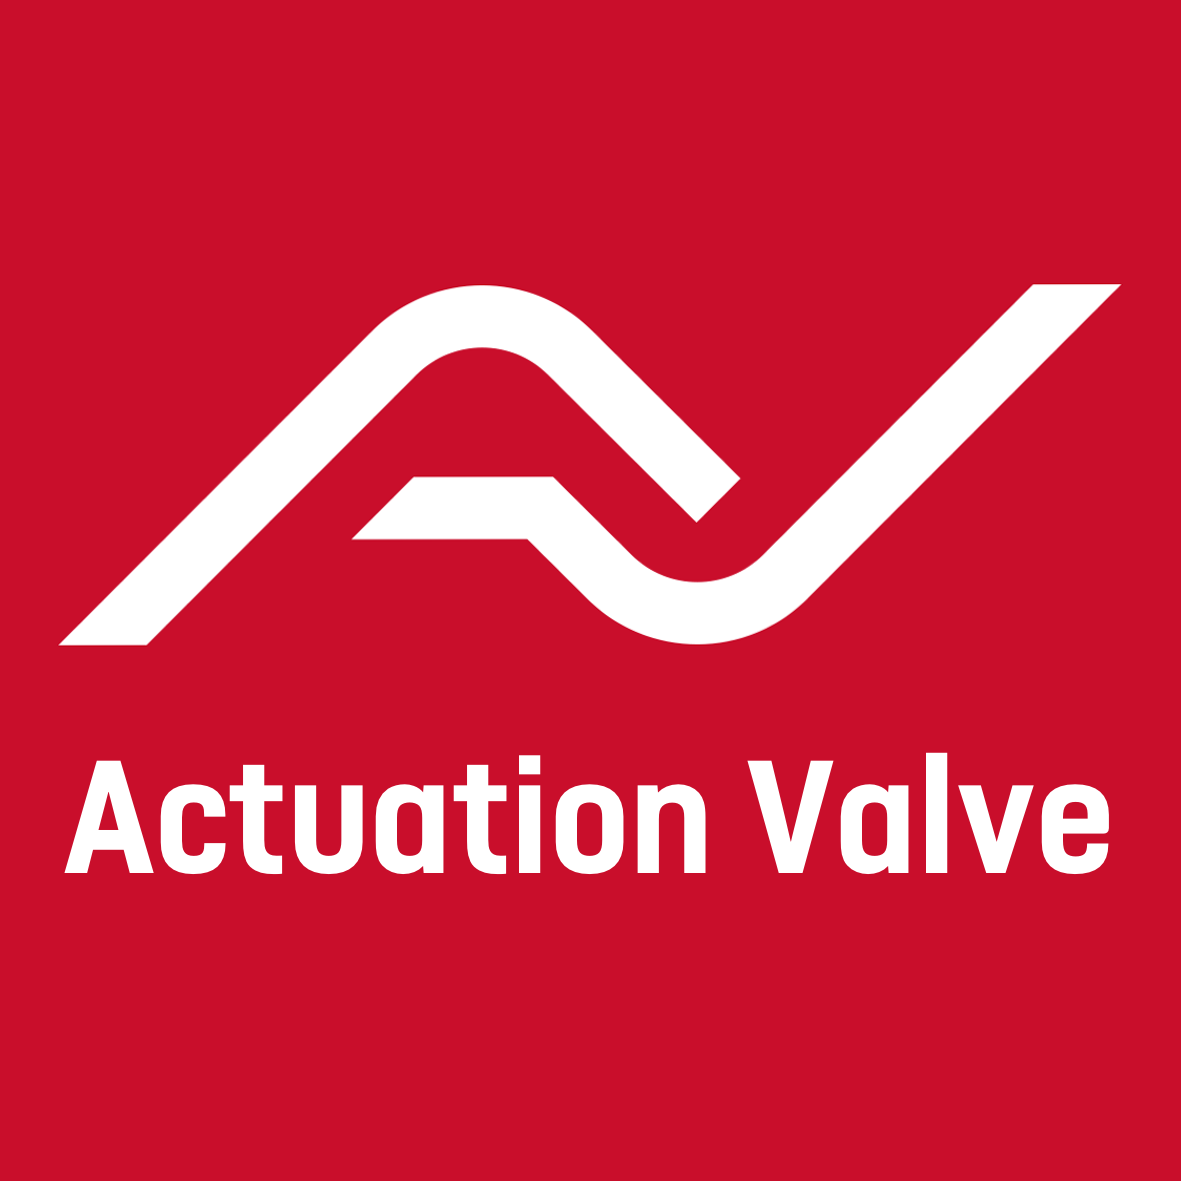 Actuation Valve & Control Ltd